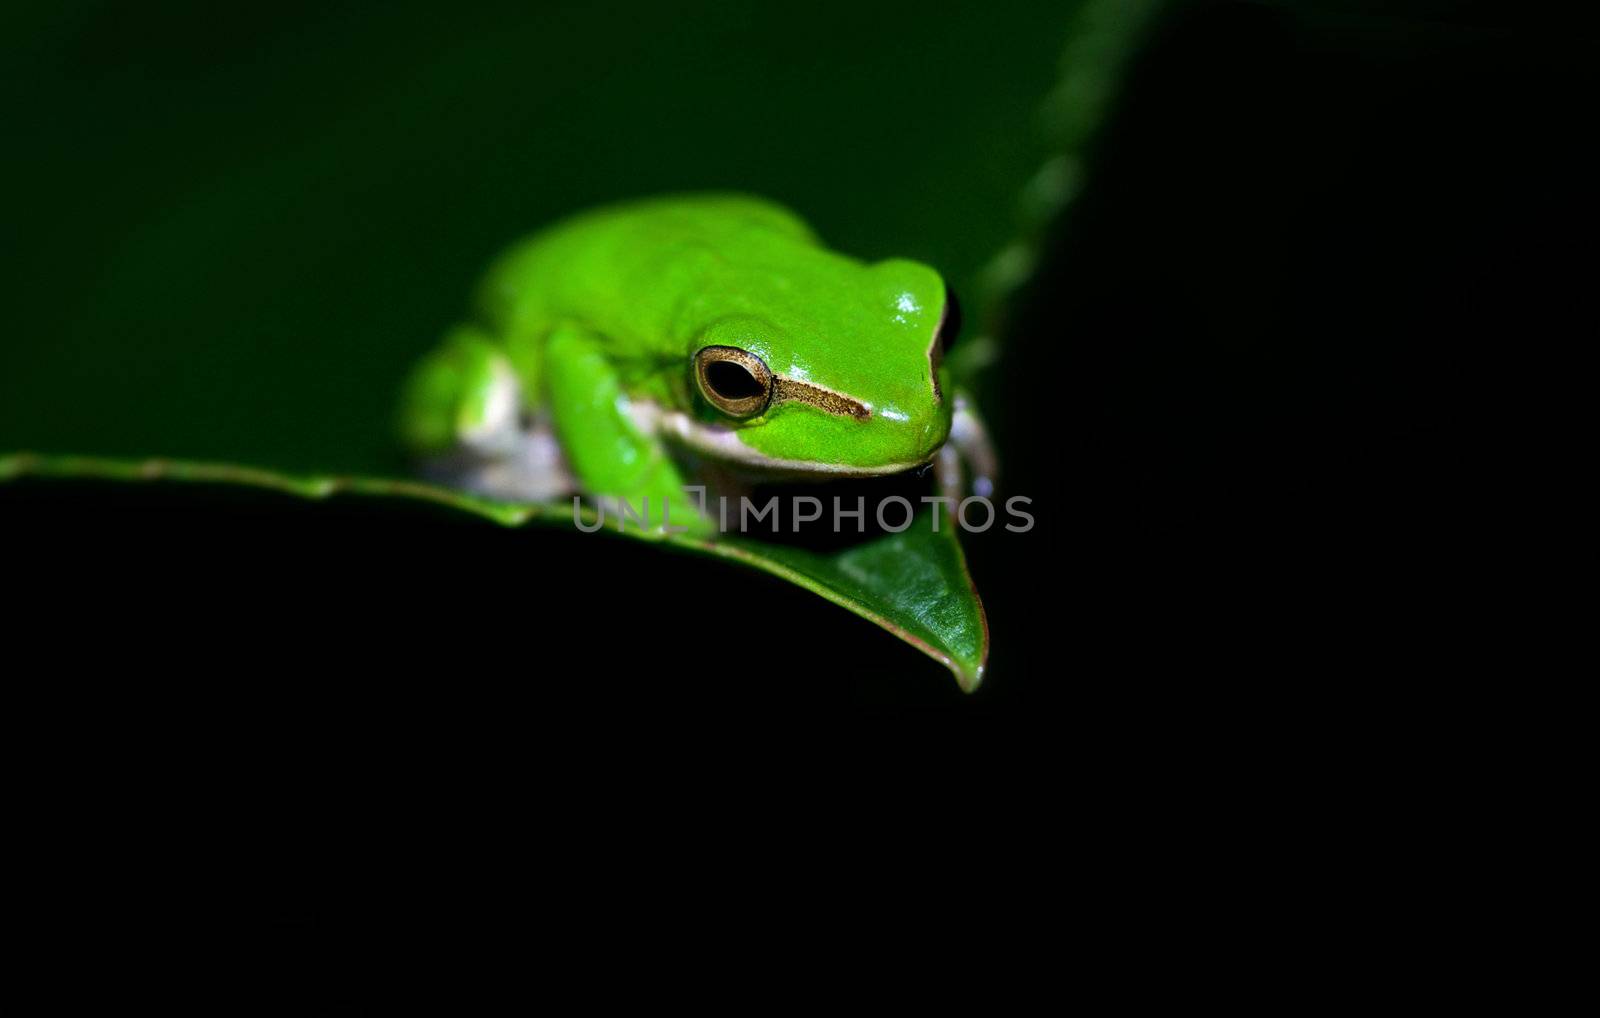 great image of a dwarf green tree frog litoria fallax on a leaf